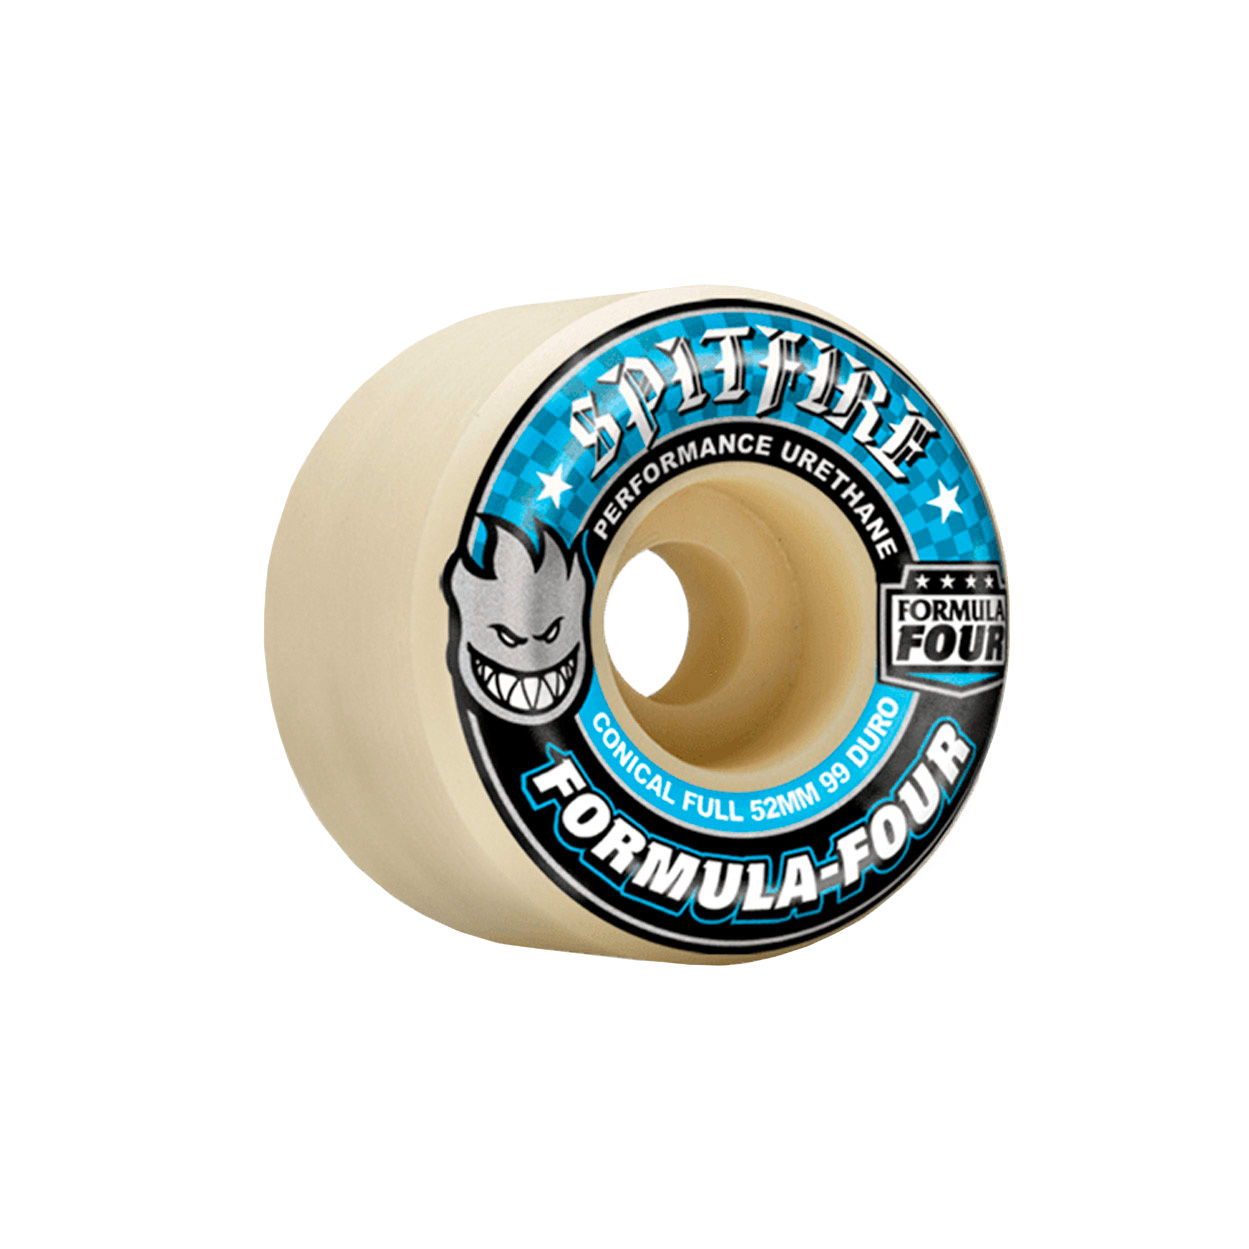 Spitfire Skateboardrollen Formula Four Conical Full 52mm 99A (natural)